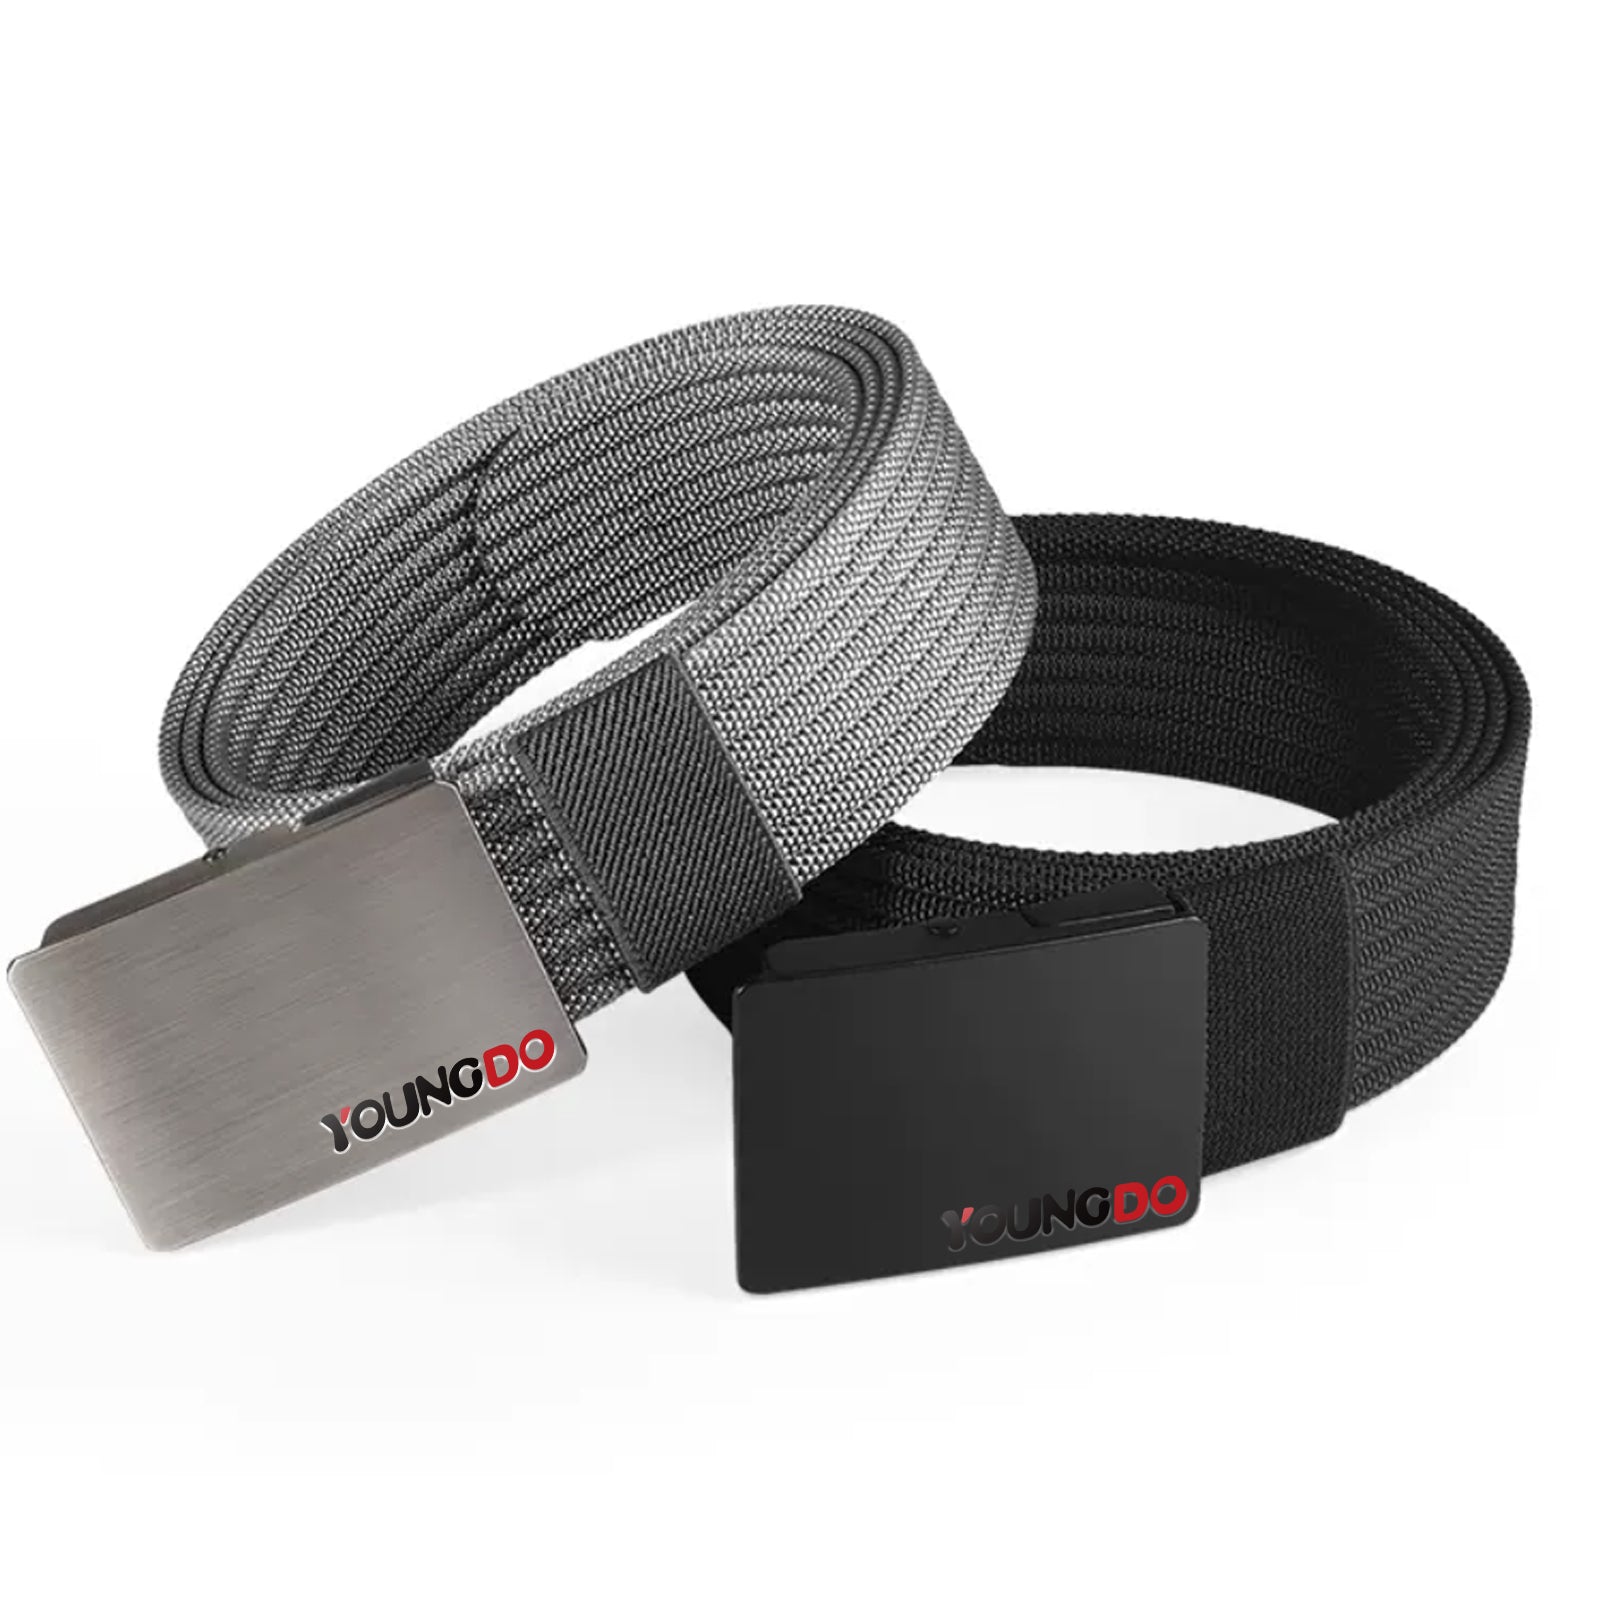 YOUNGDO web belt for men, 1.5 inch Nylon Buckle Belt